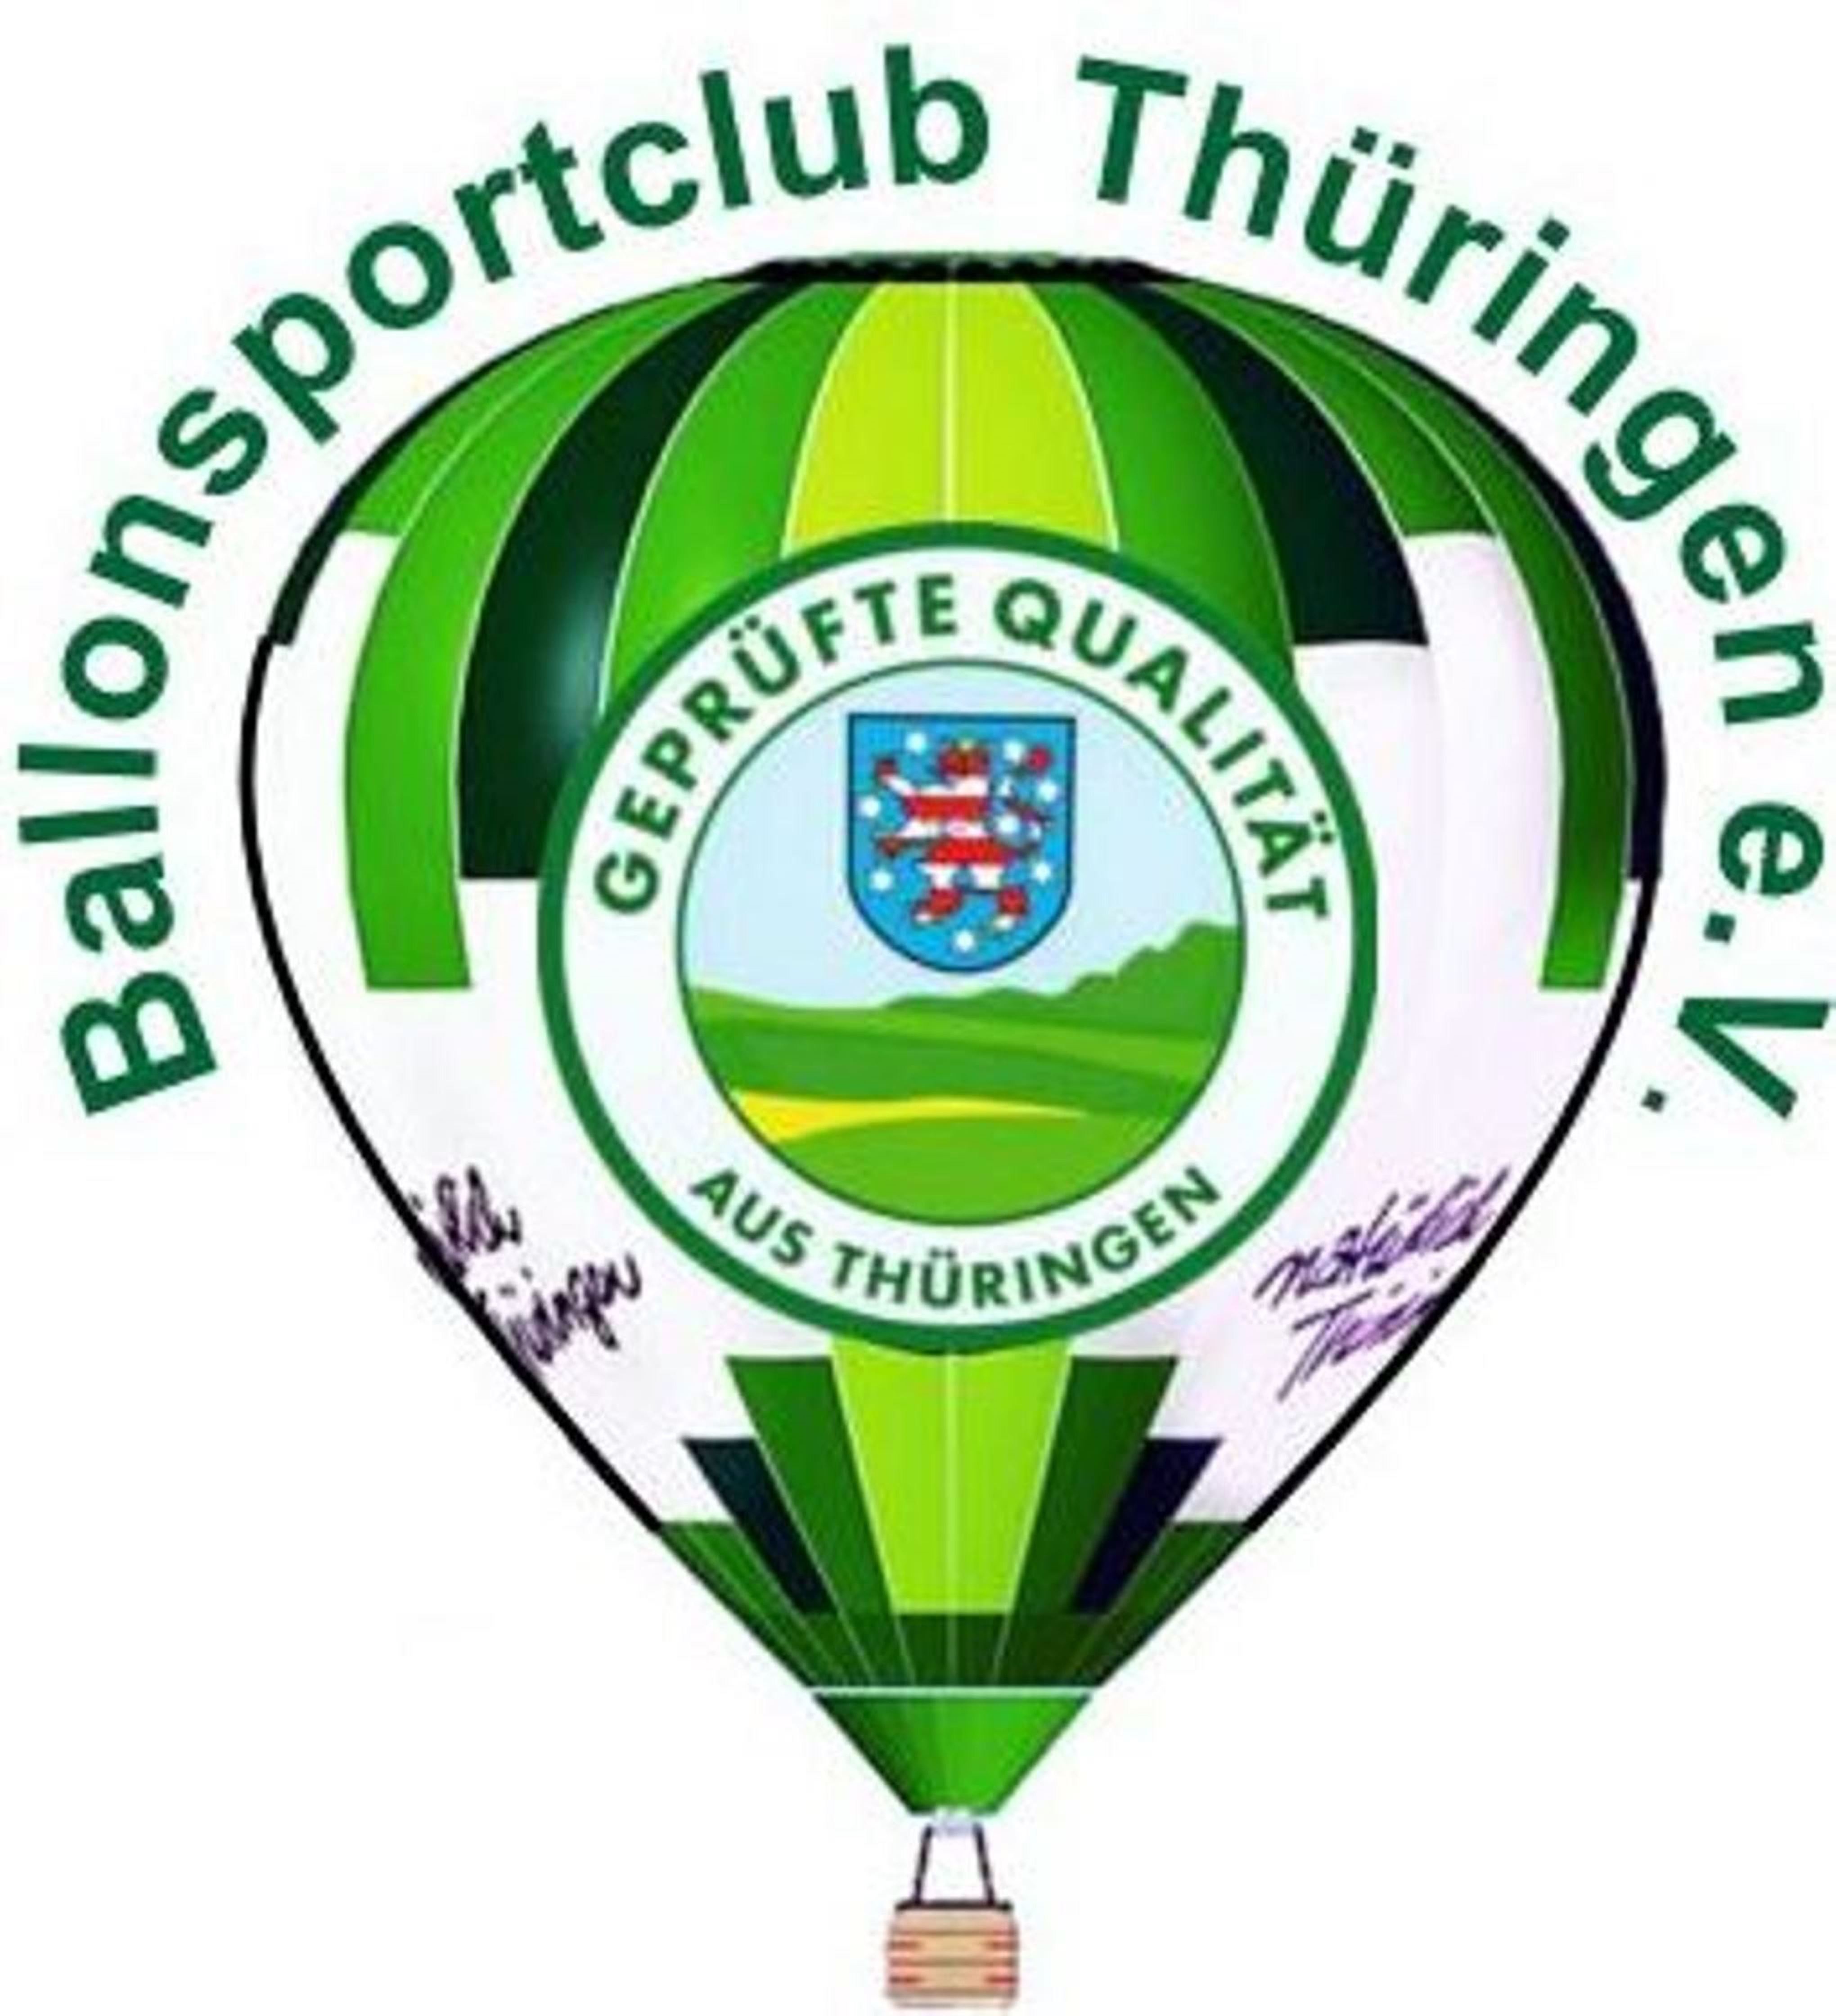 Ballonsportclub Thüringen e. V.